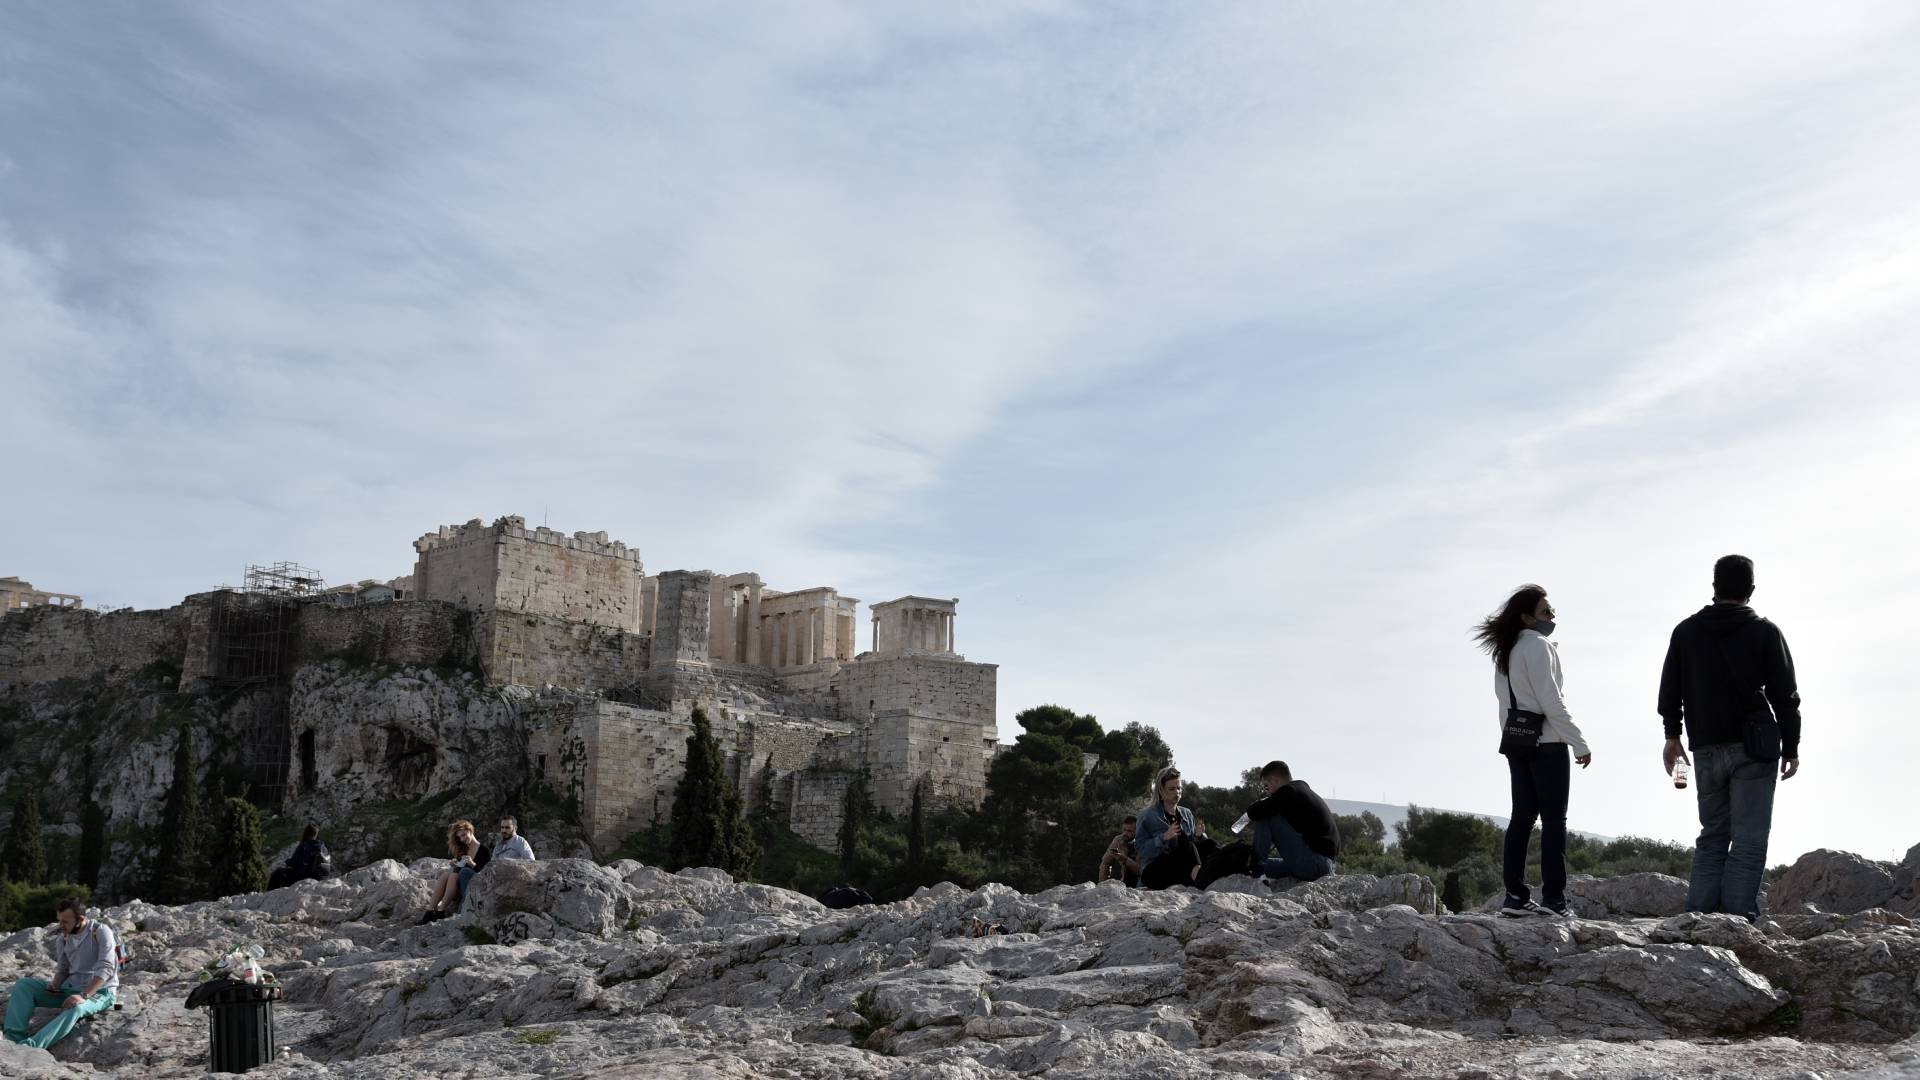 FT: Η Ελλάδα πρωταγωνιστεί στην ανάπτυξη αλλά είναι η φτωχότερη χώρα της Ευρωζώνης